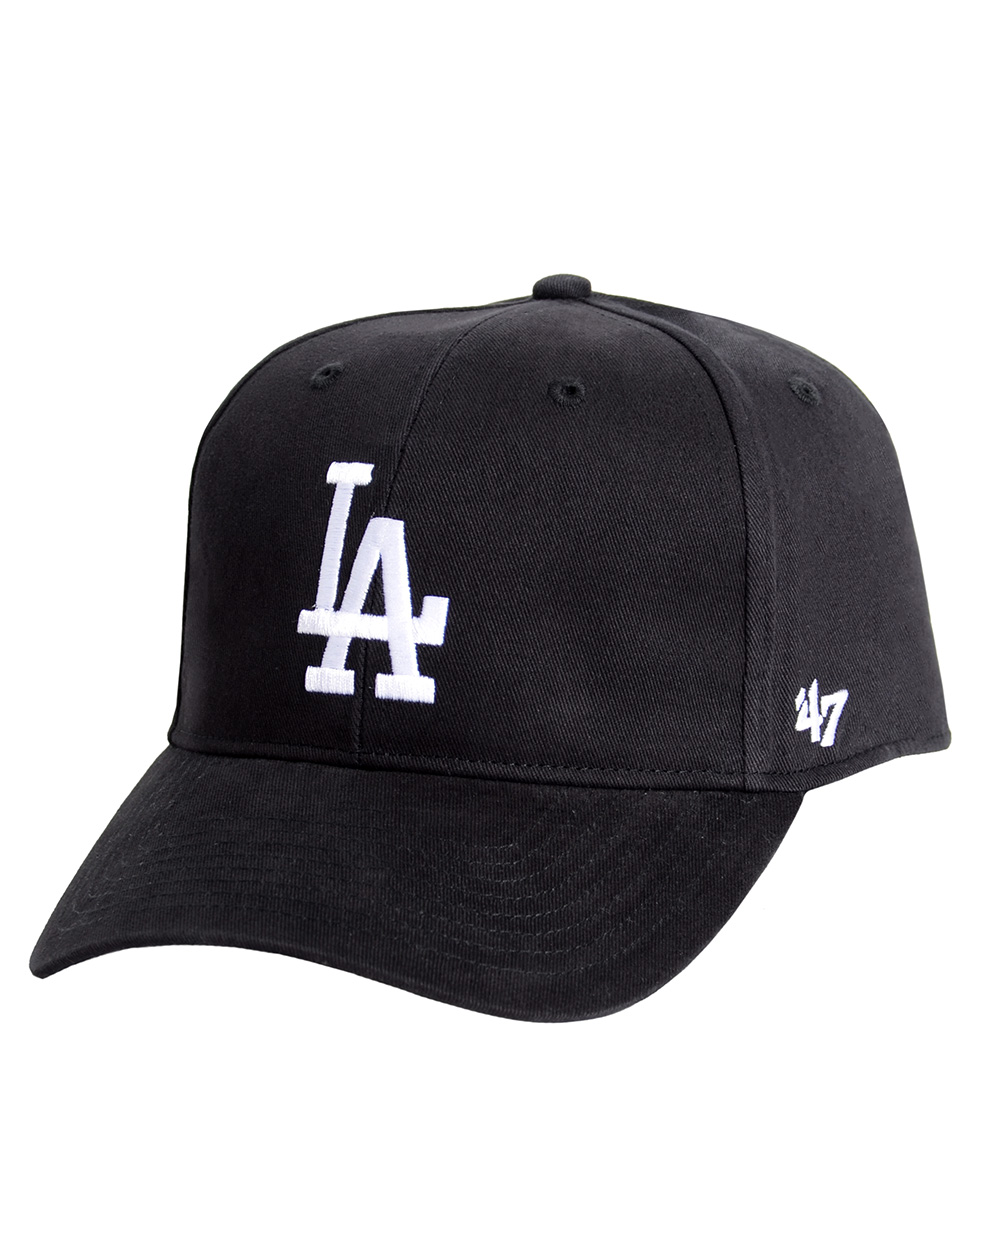 Бейсболка с козырьком '47 Brand MVP Cotton Los Angeles Dodgers Black White отзывы